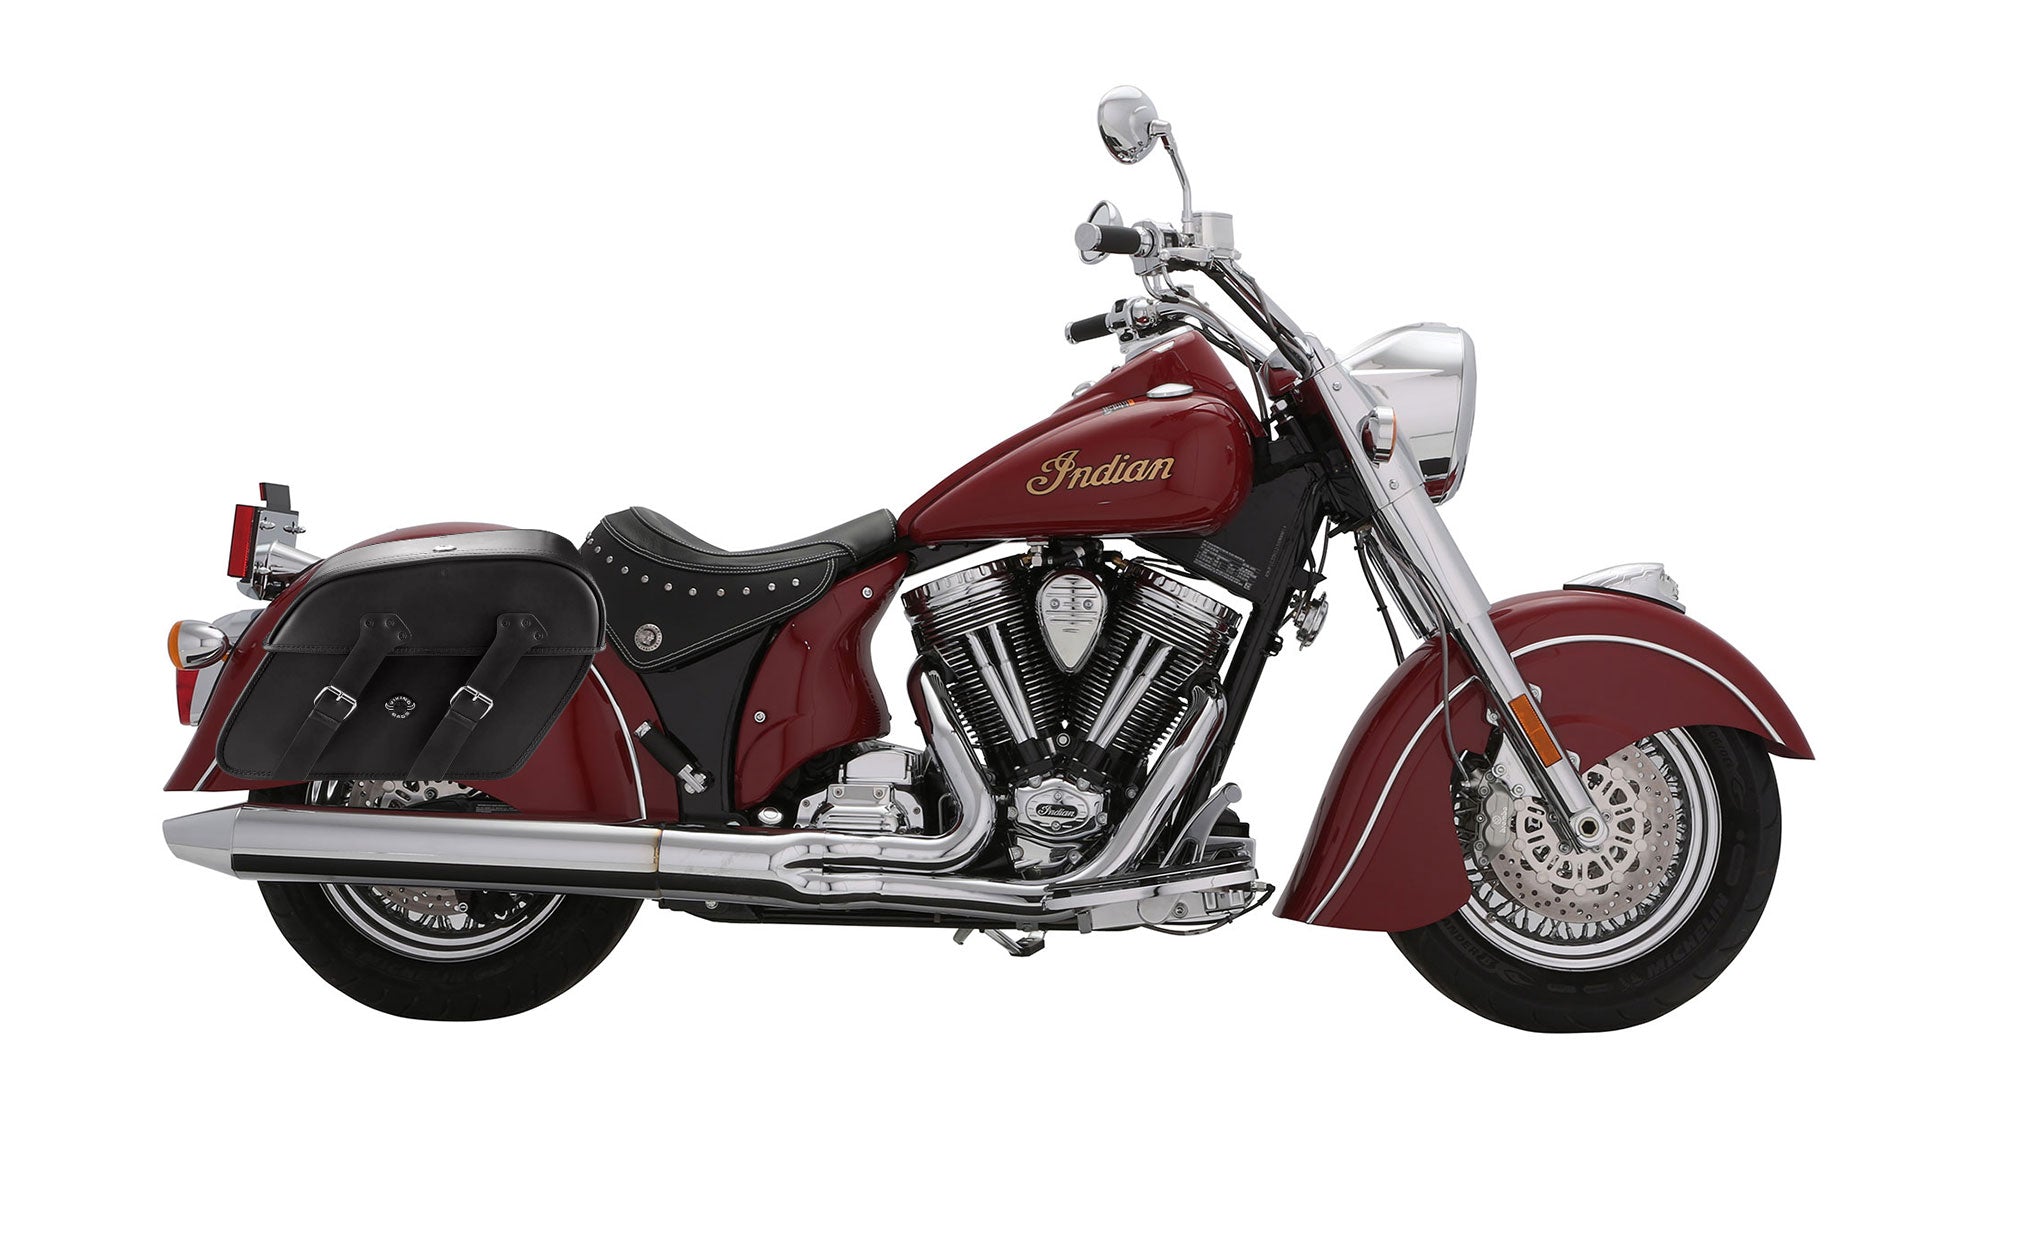 Viking Raven Extra Large Indian Chief Deluxe Leather Motorcycle Saddlebags on Bike Photo @expand